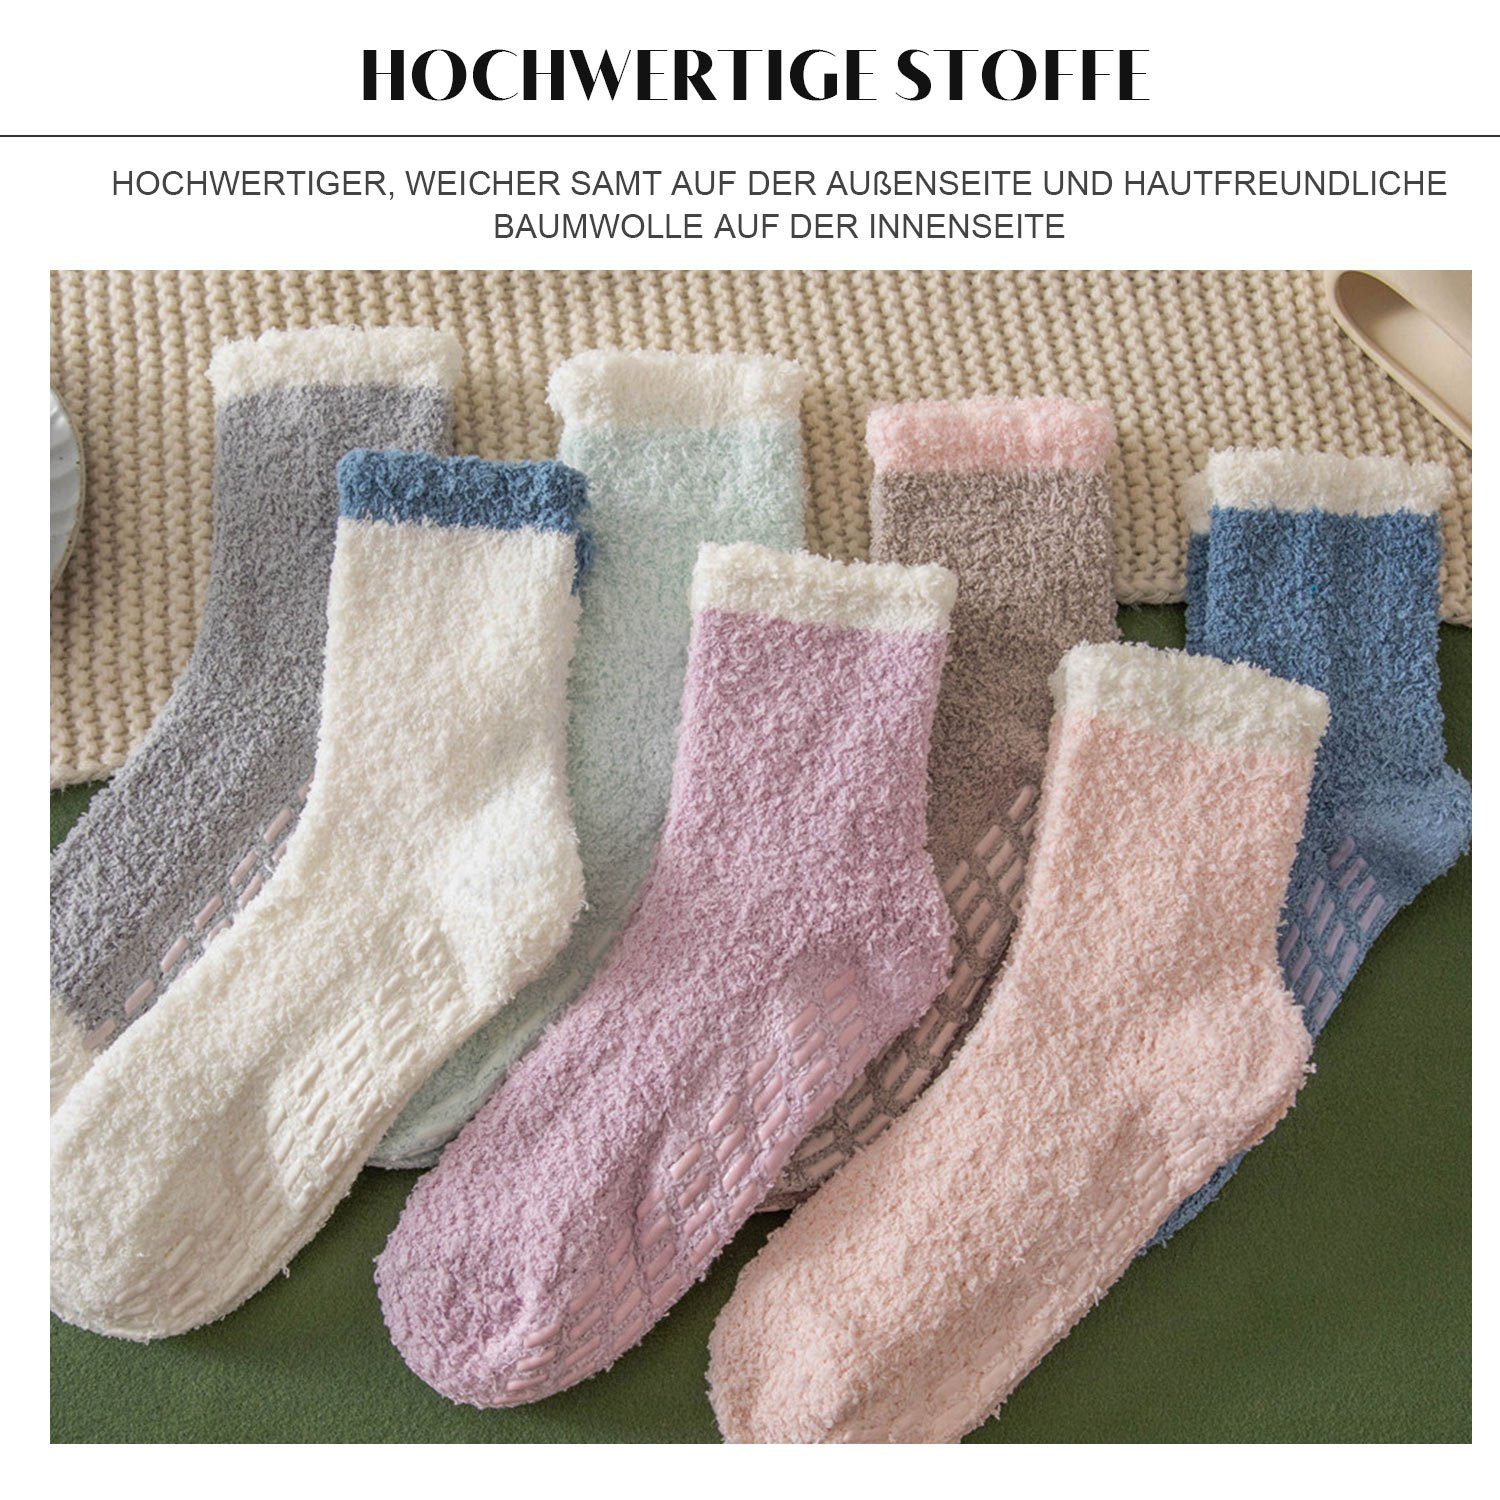 MAGICSHE Langsocken 2 Paare flauschige Socken und Winter Fleece Rutschfeste für warme blau weiche Socken